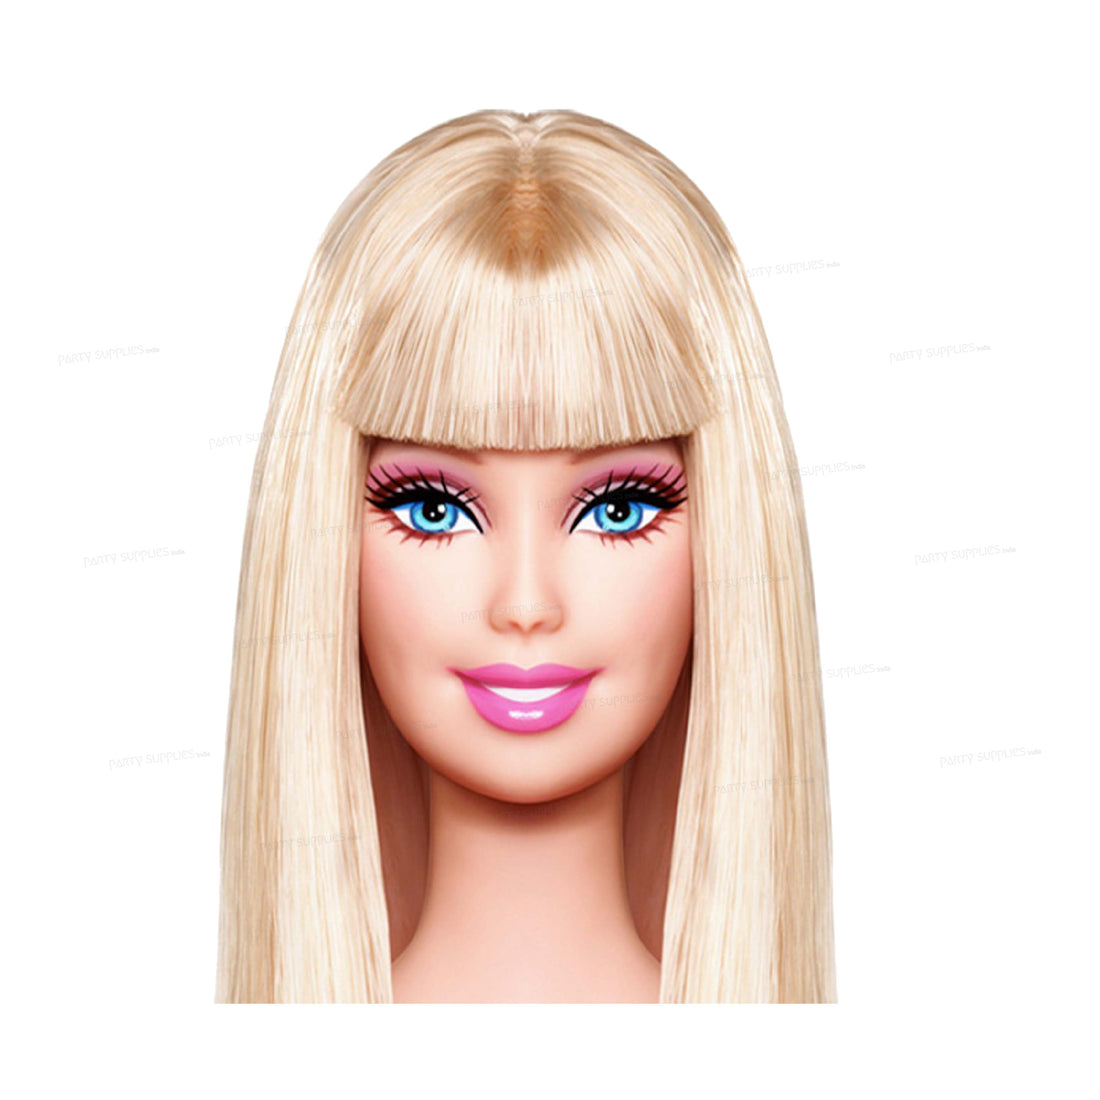 PSI Barbie Theme Cutout - 14